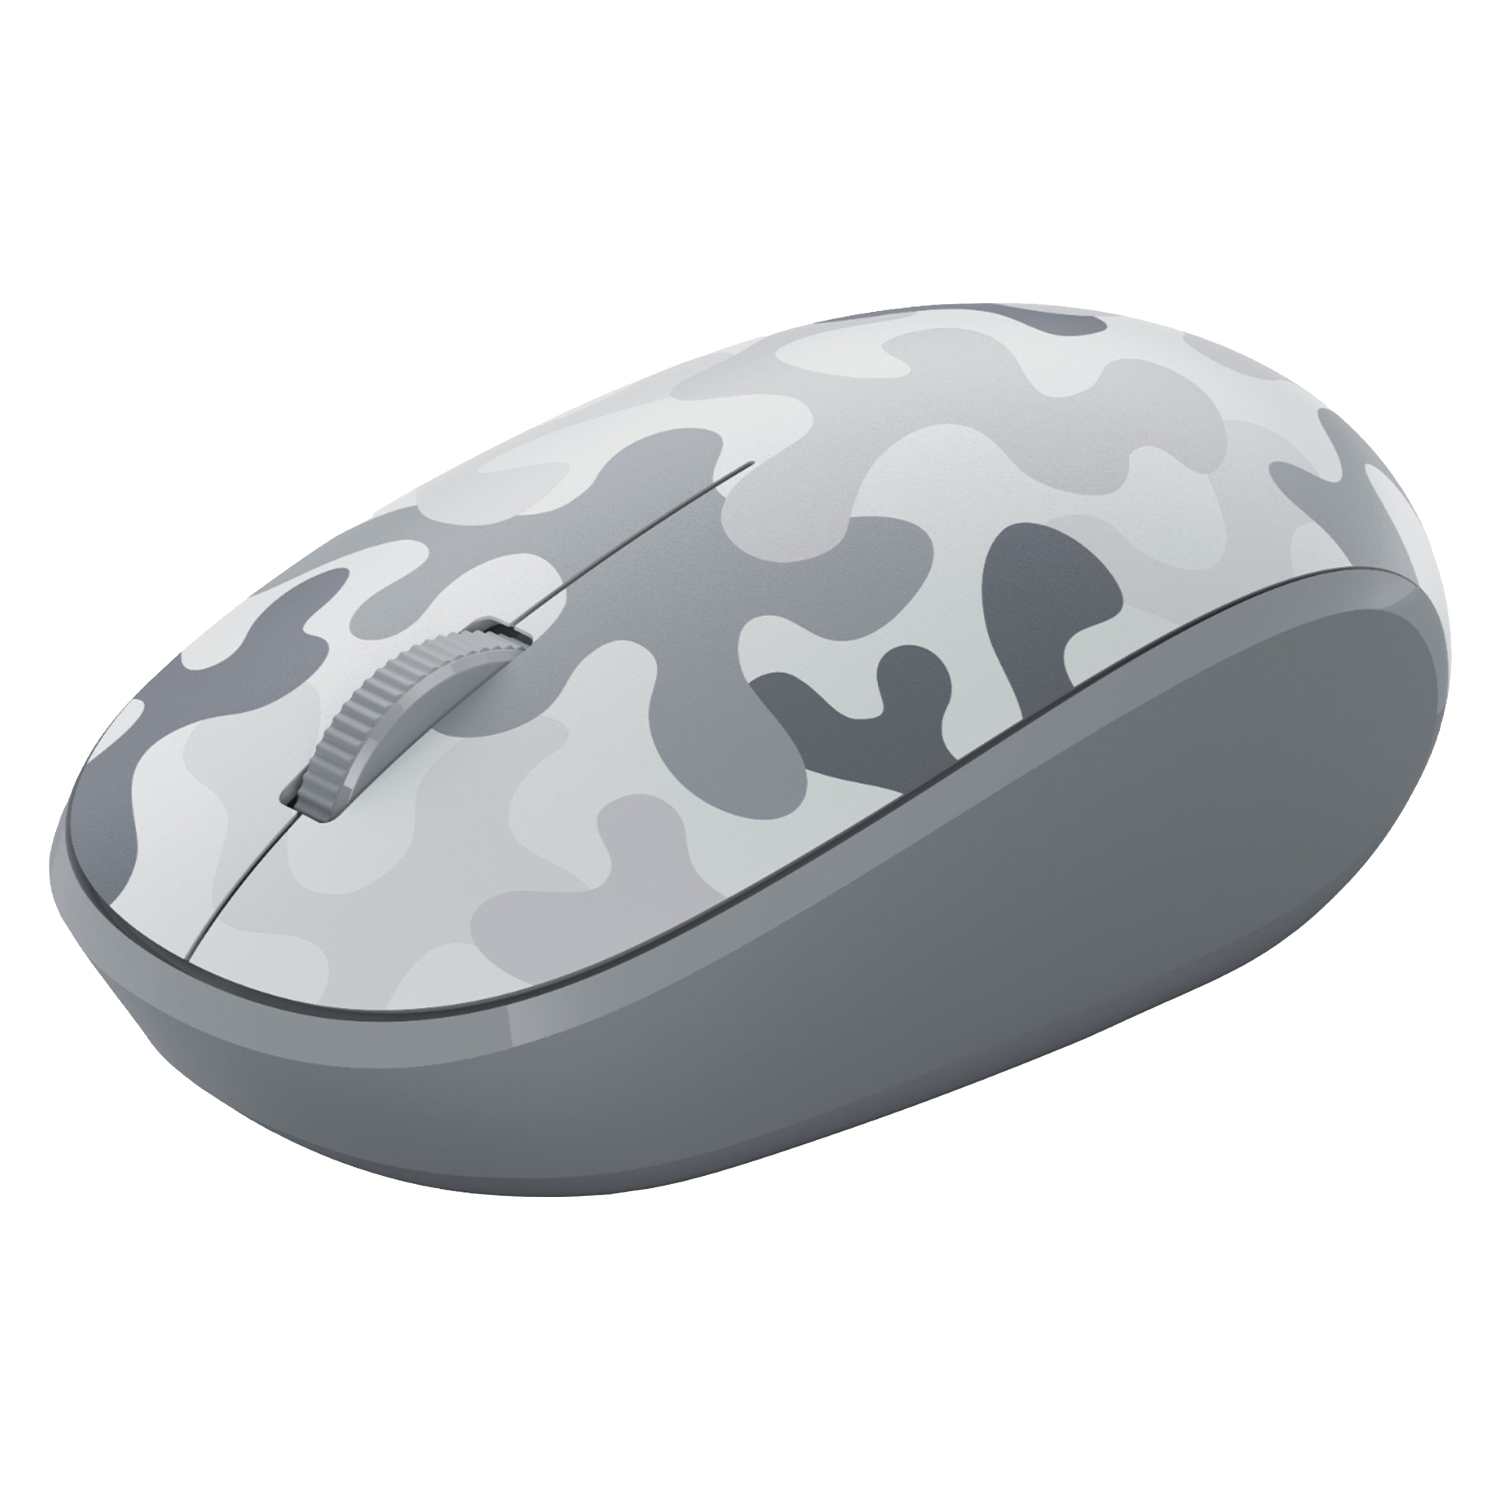 Mouse Microsoft 8KX-00001 Sem Fio / Bluetooth / USB / Low Energy - Branco Camuflado